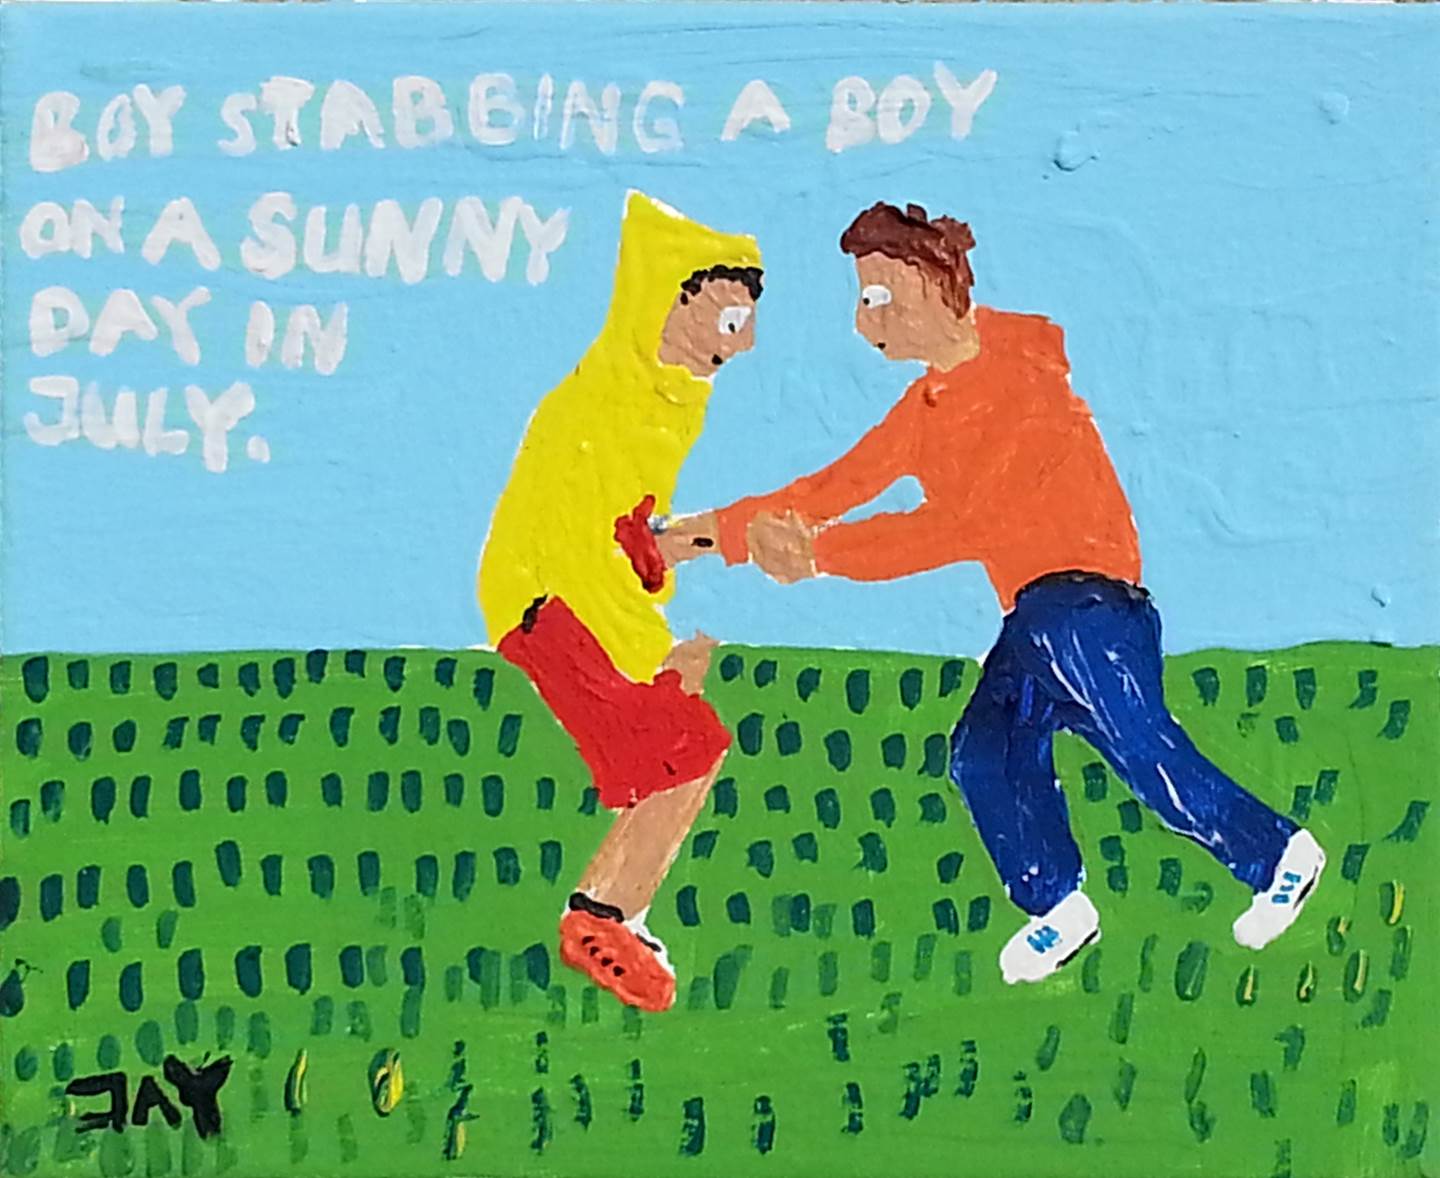 Boy stabbing a boy on a sunny day in July, original Avant-garde Acrylique La peinture par Jay Rechsteiner